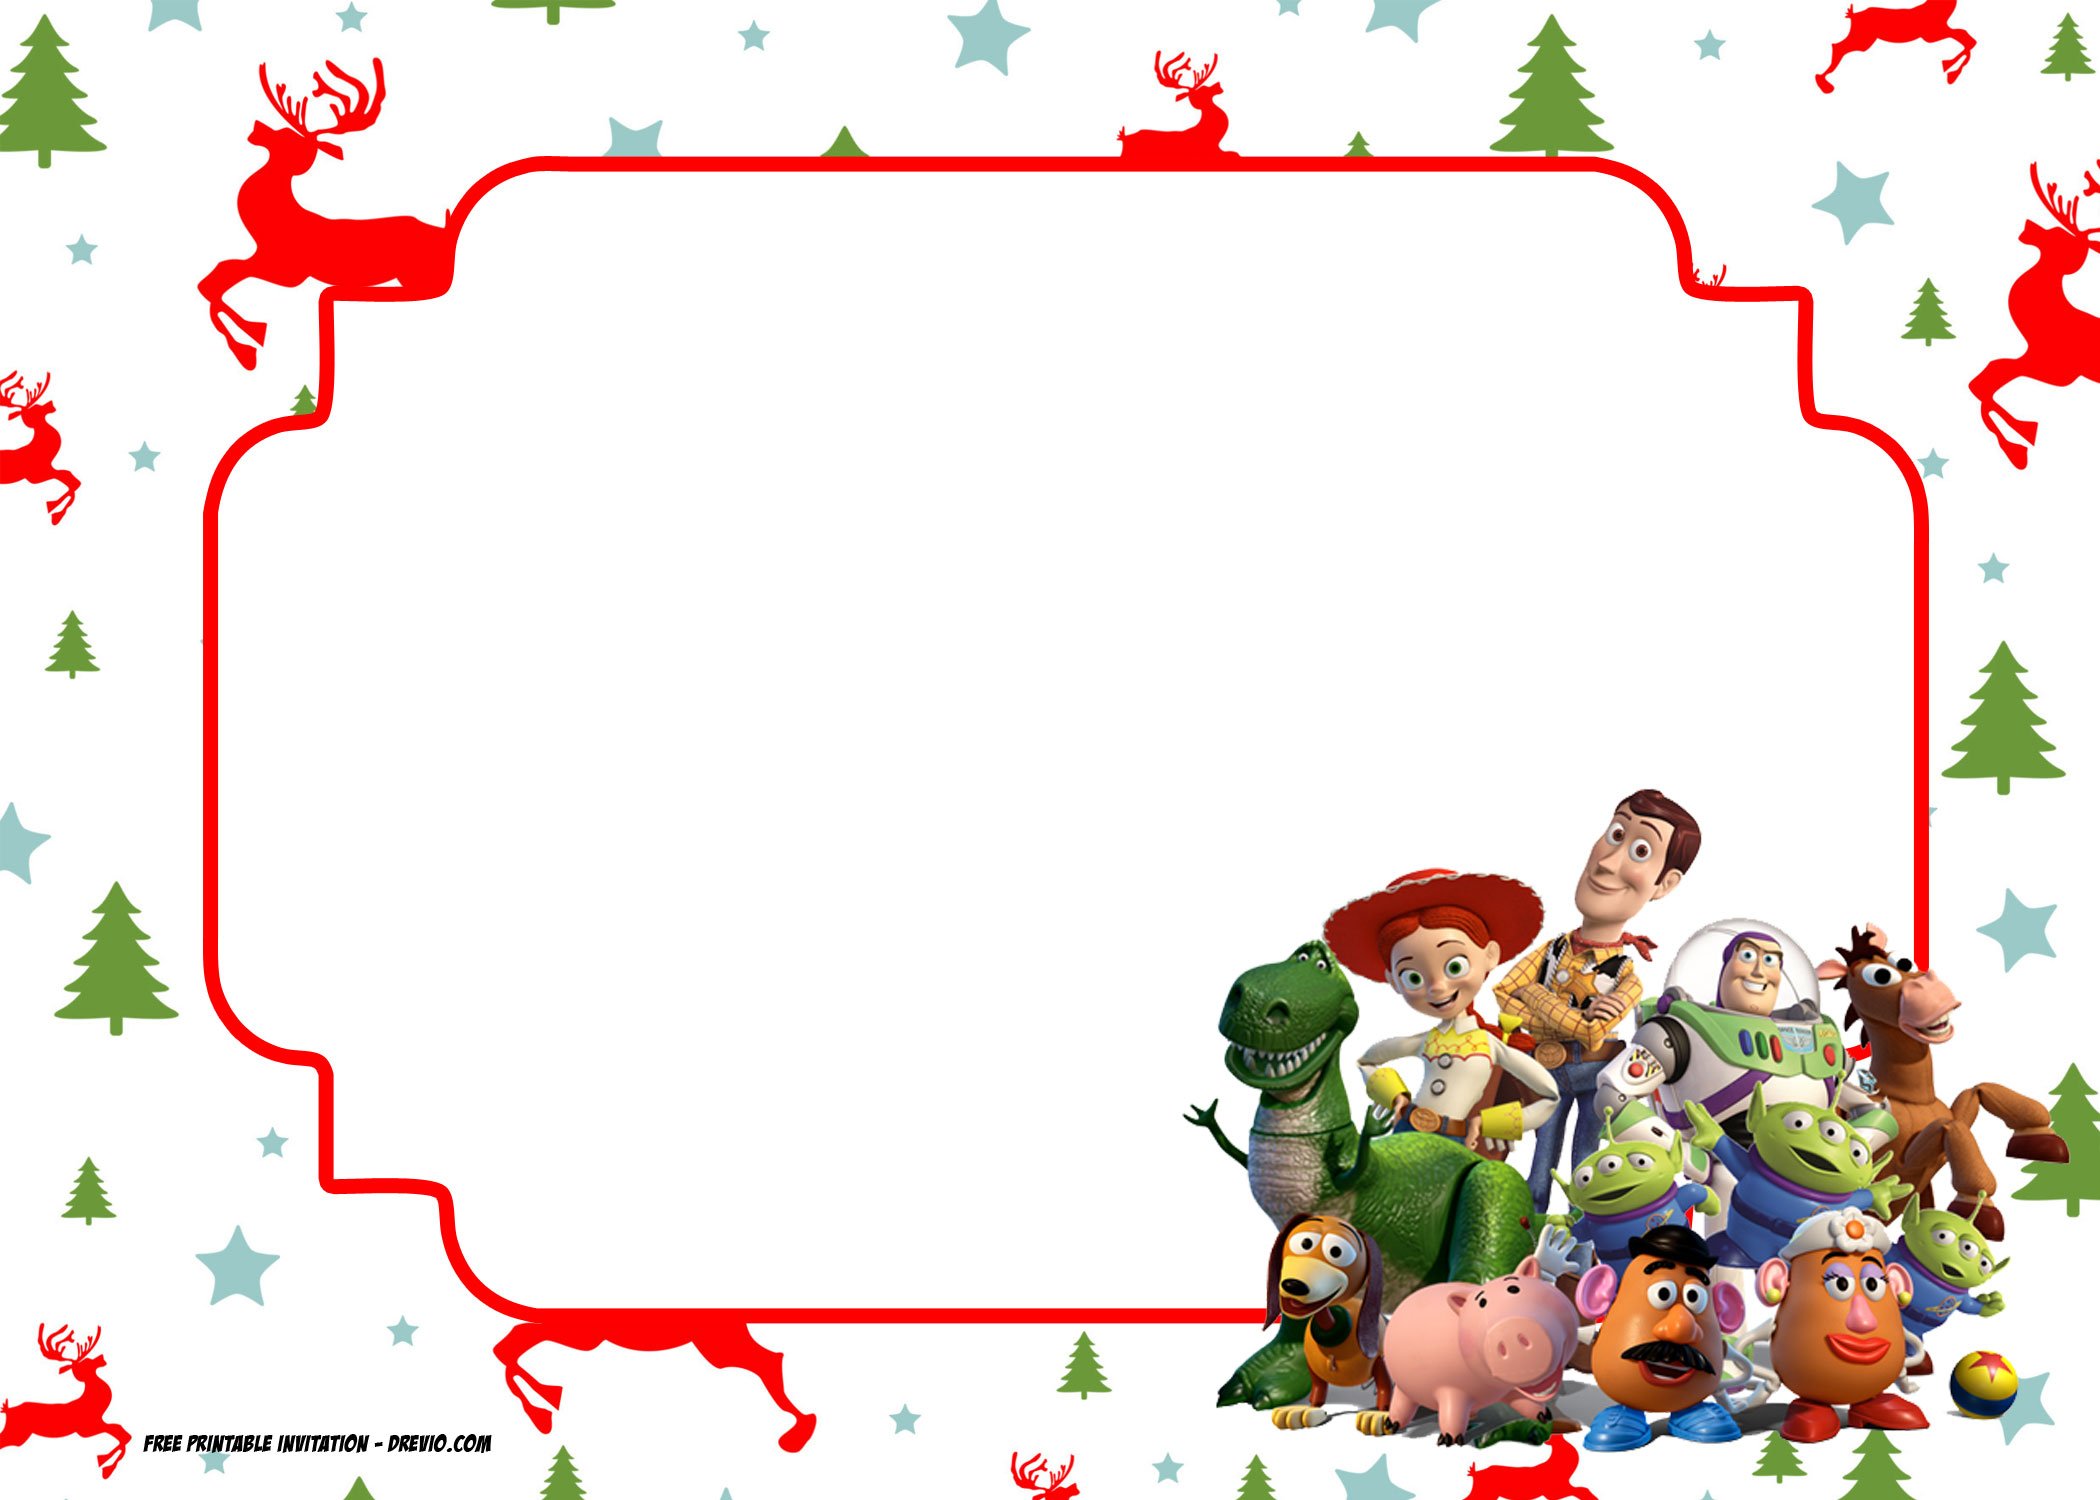 FREE-Printable-Toy-Story-Christmas-Invitation